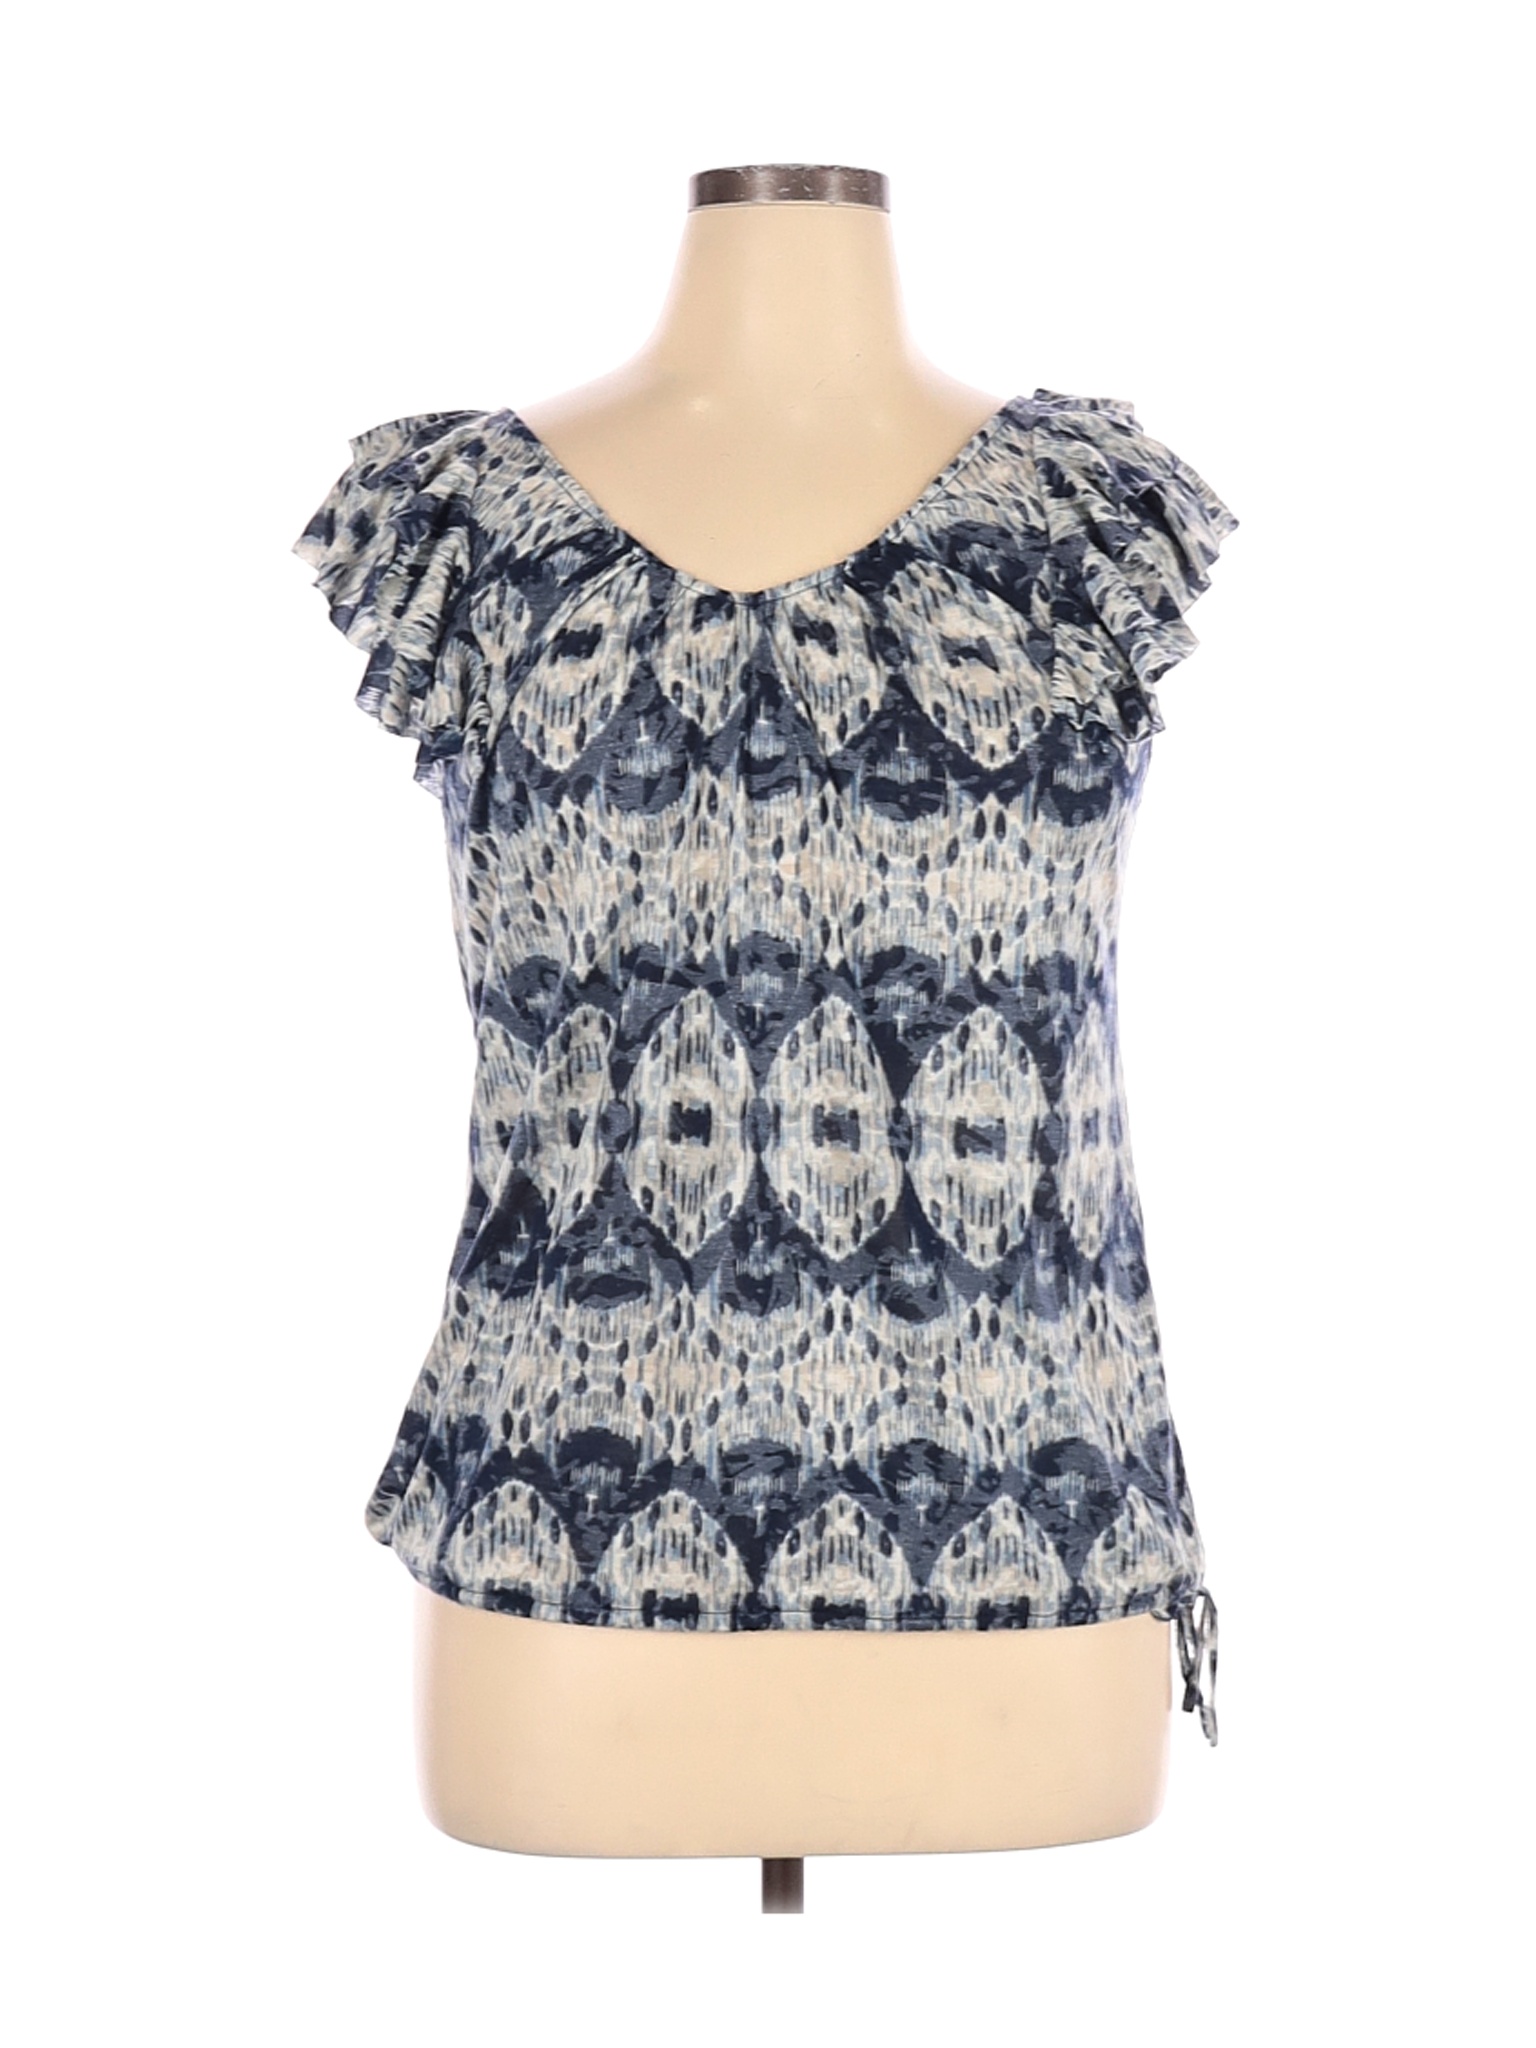 INC International Concepts Women Blue Short Sleeve Top XL | eBay